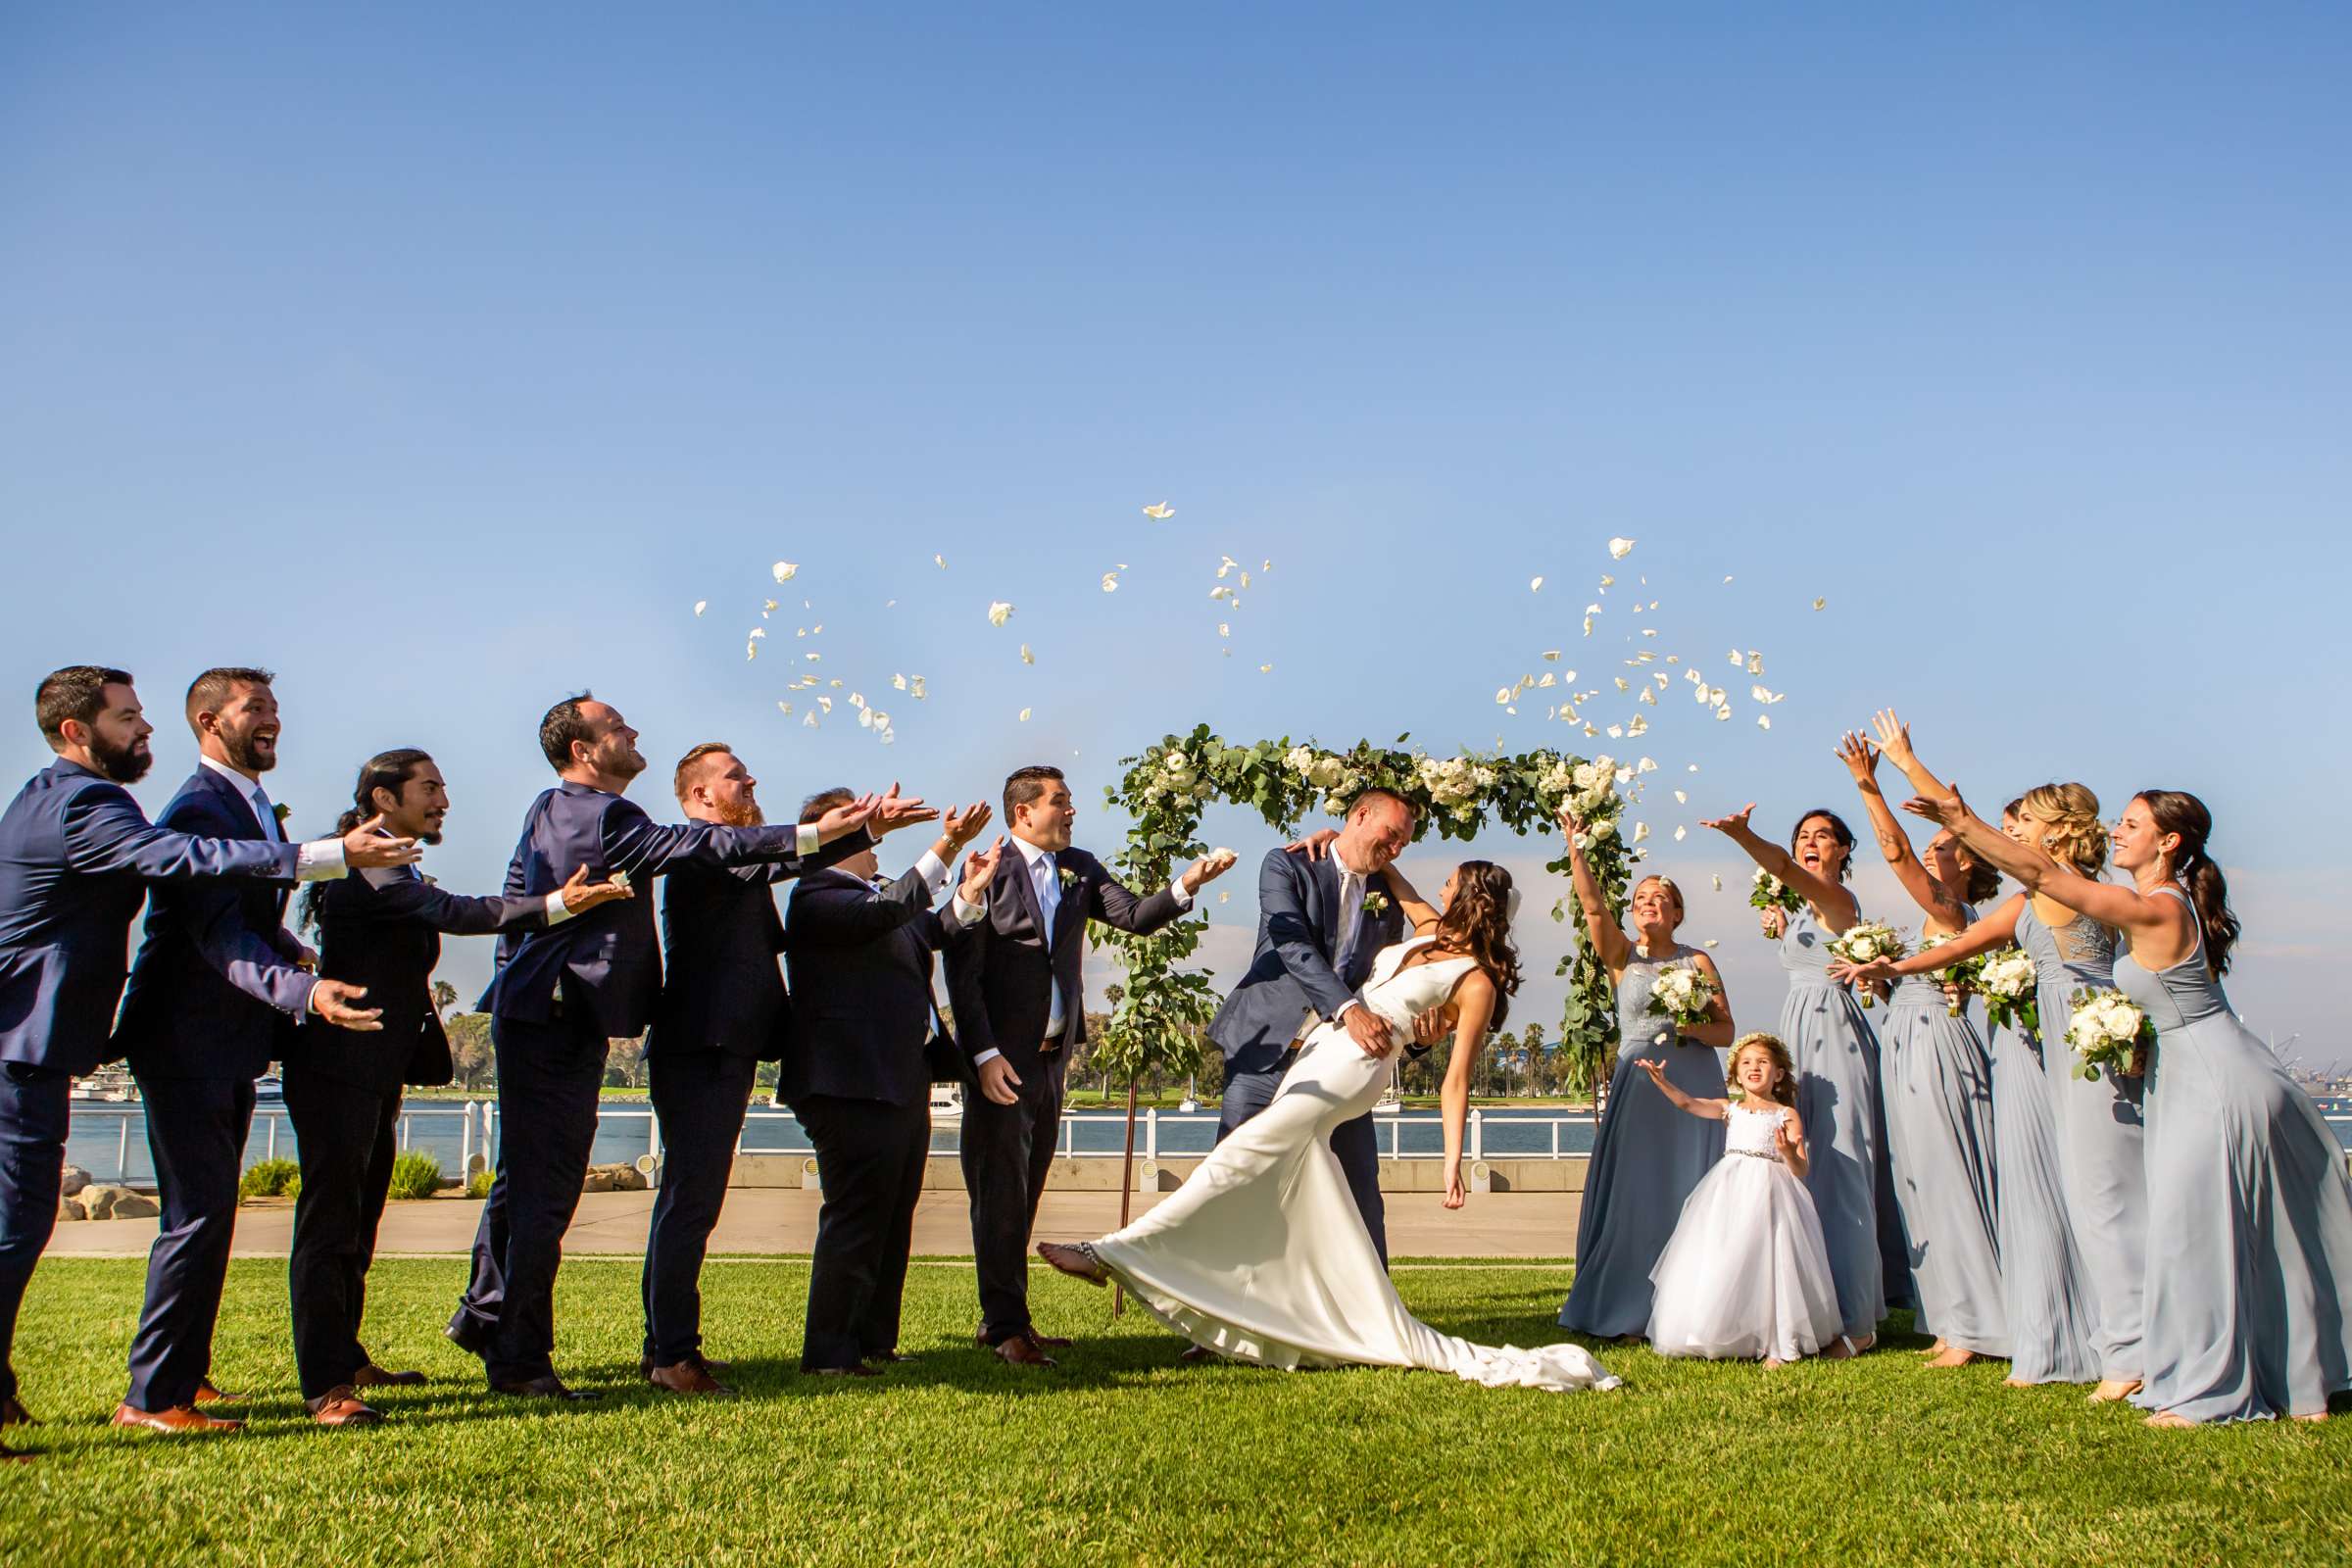 Coronado Community Center Wedding coordinated by Breezy Day Weddings, Cheryl and Tim Wedding Photo #13 by True Photography